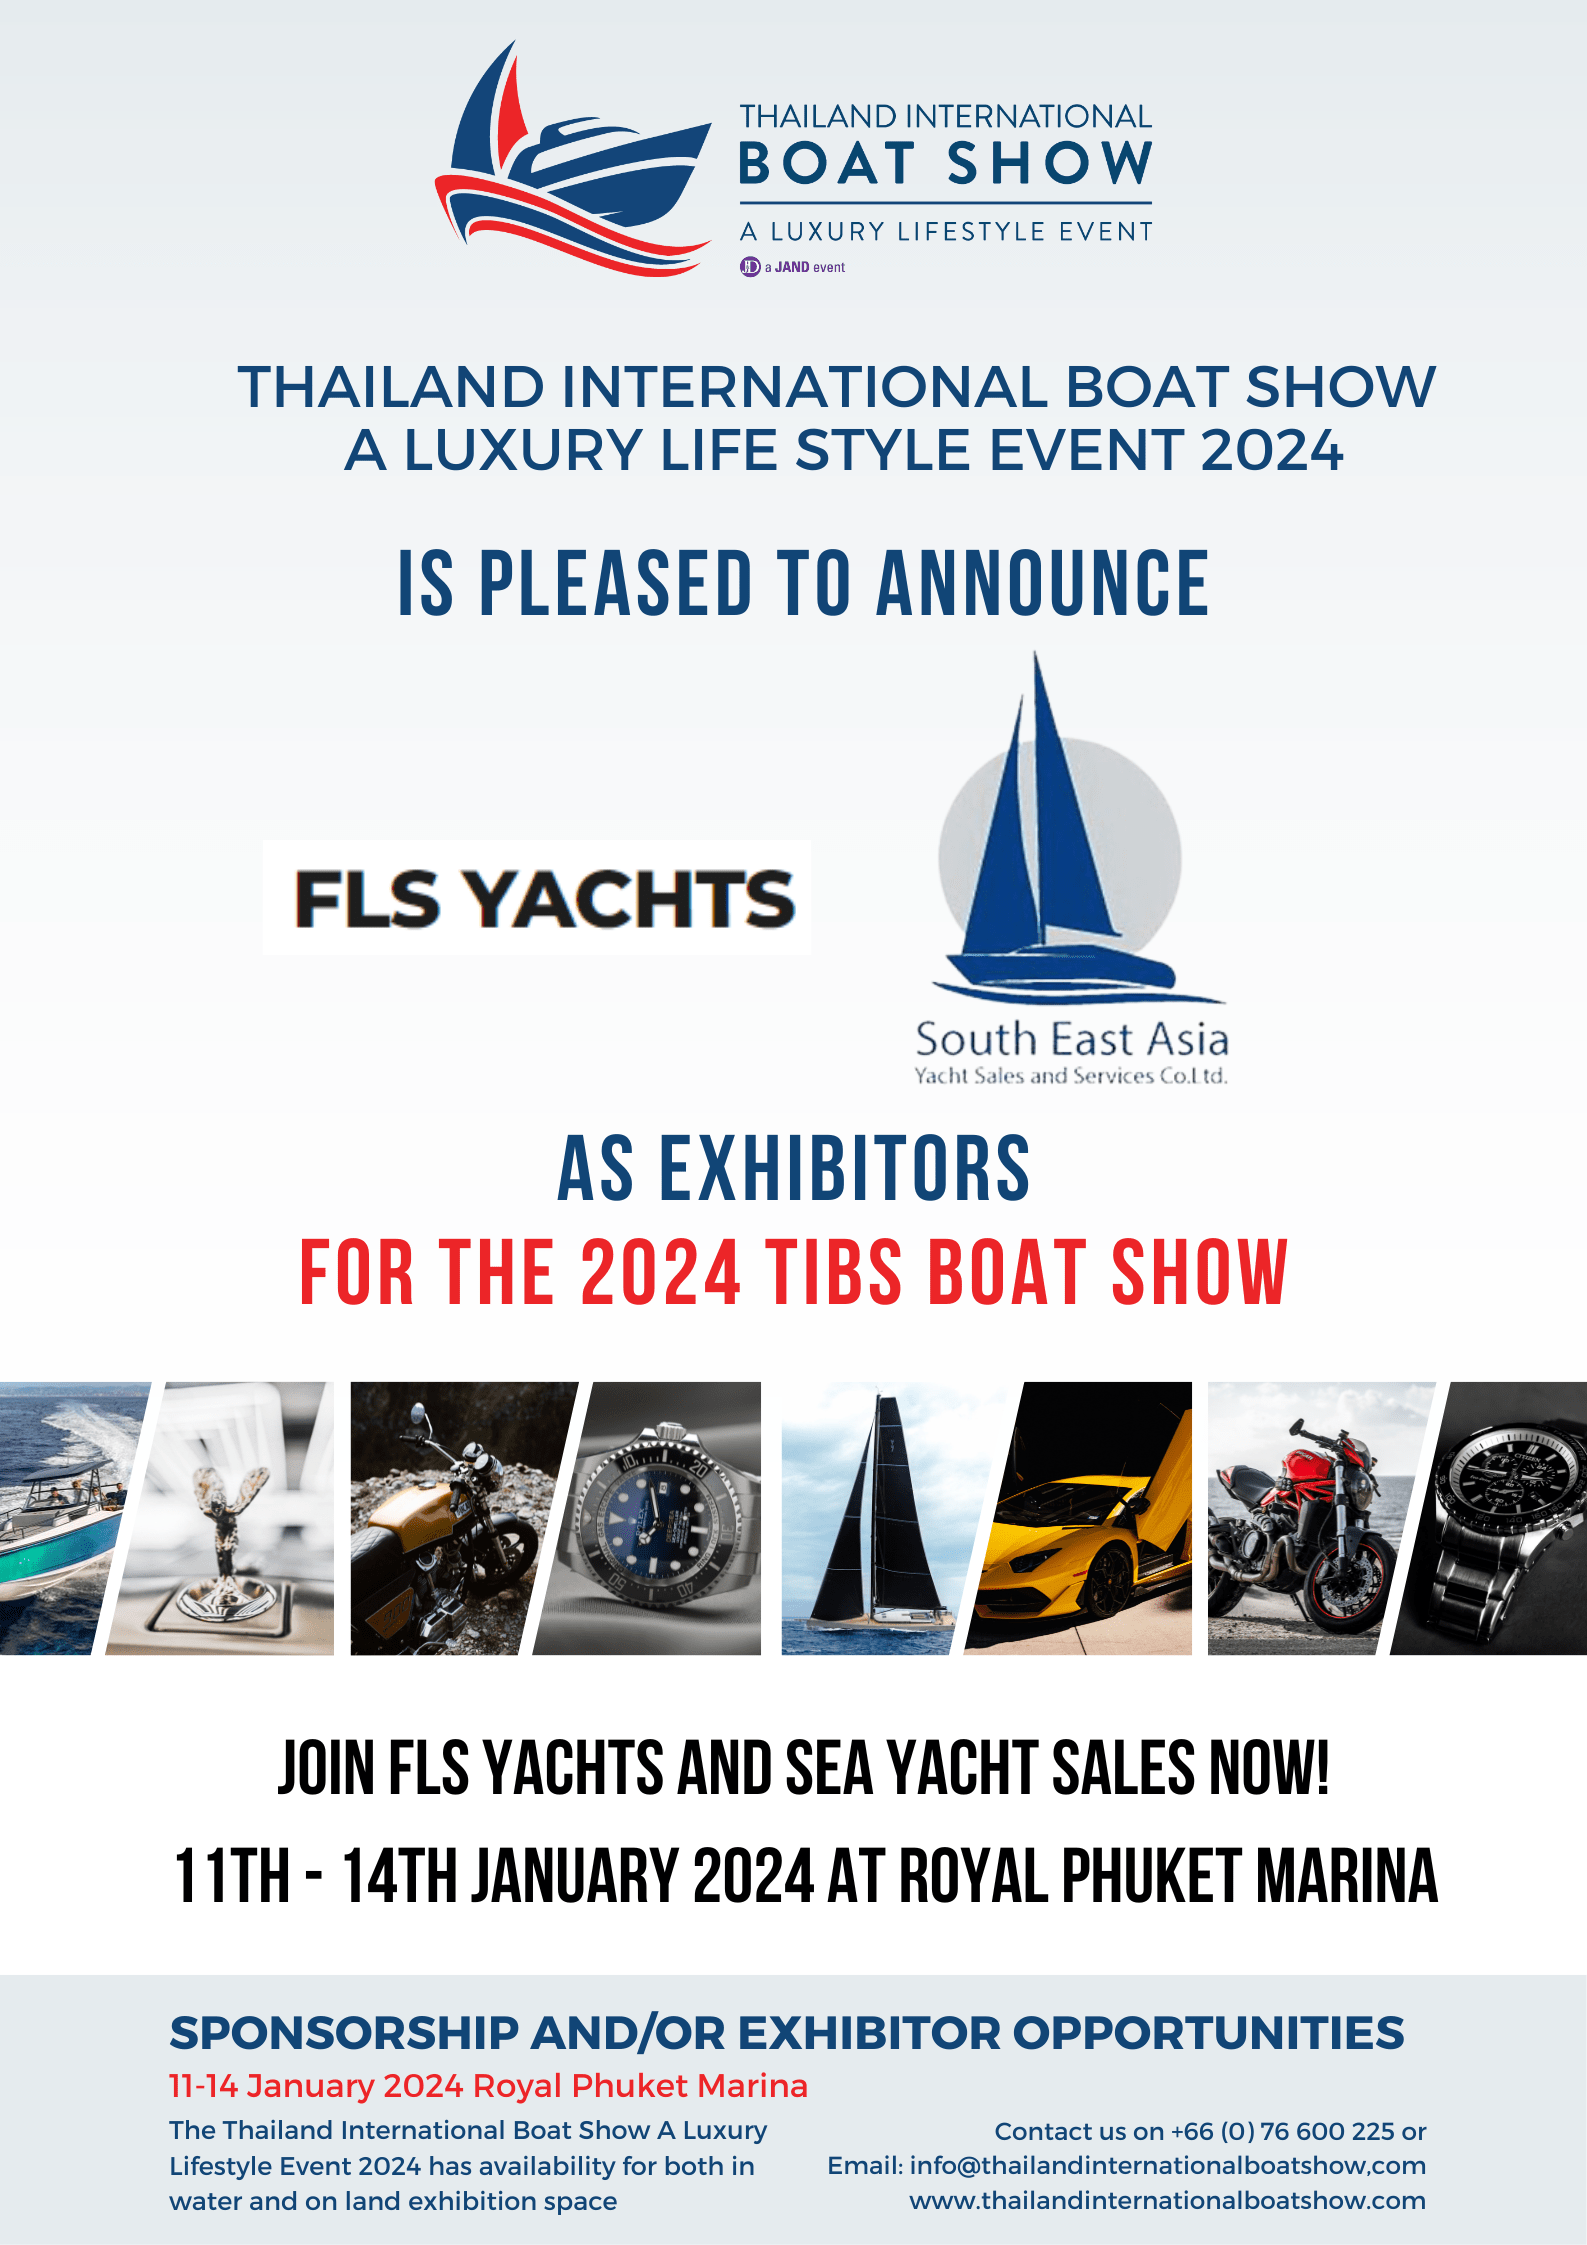 FLS Yachts exhibitors